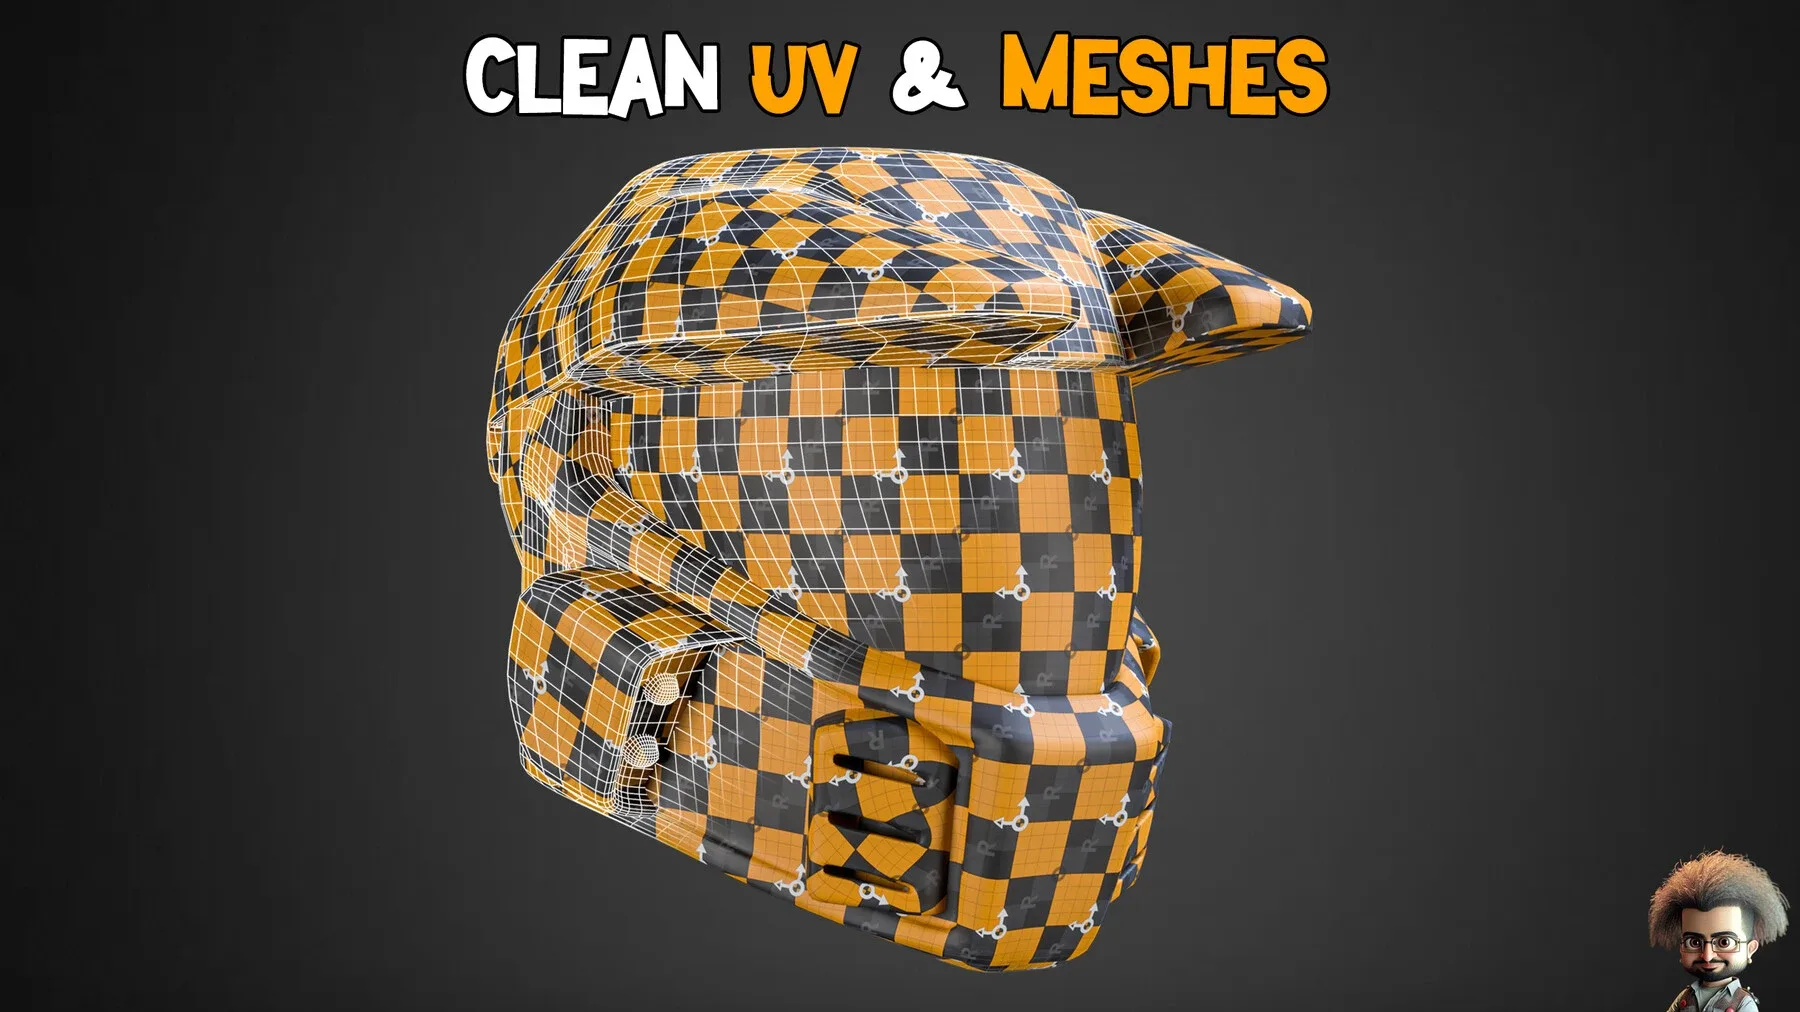 30 Sci-Fi Helmets Base Mesh + Textures